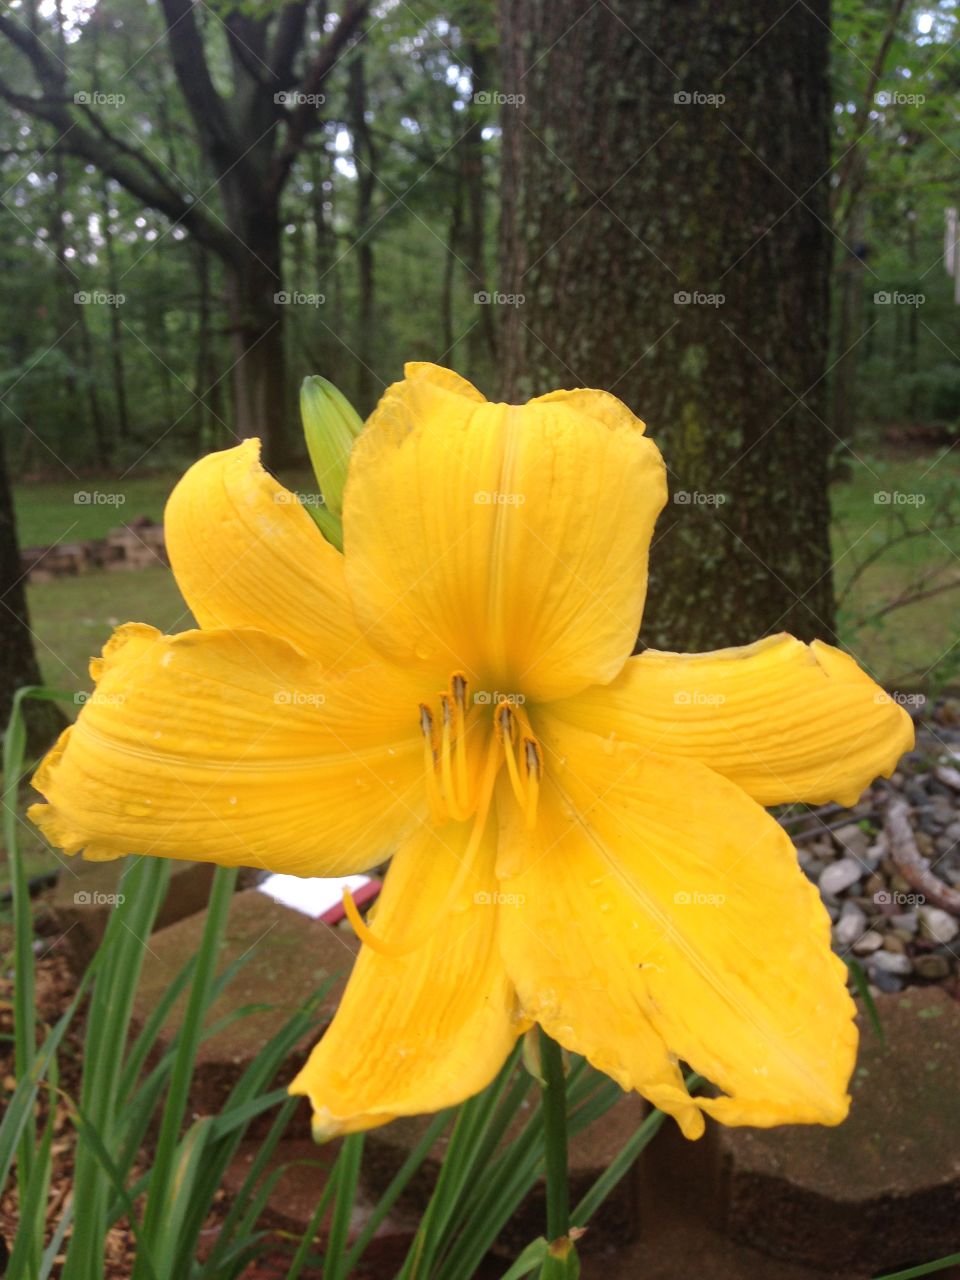 Yellow treasure. Very nice yellow flower in full bloom after lots of rain in Battle Creek Michigan 